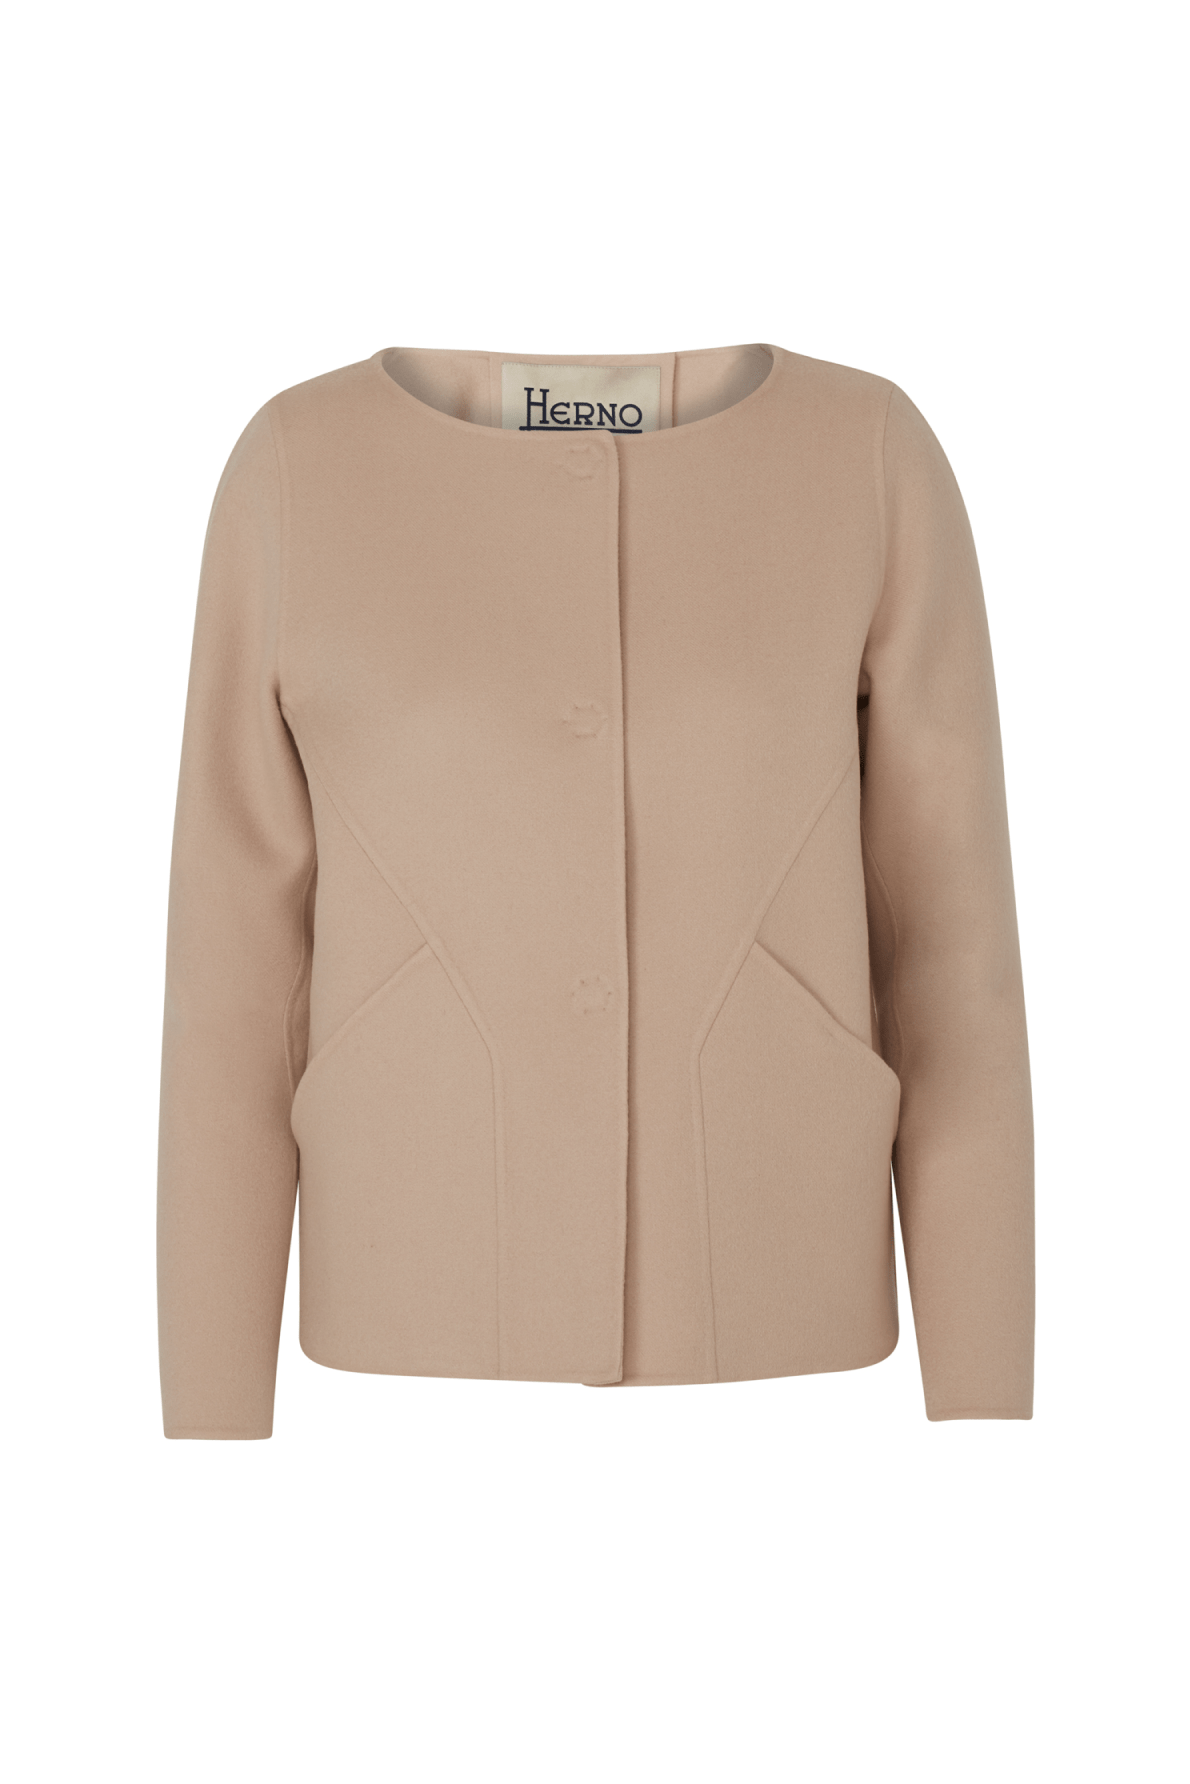 Herno Women's Cashmere Jacket Beige - Front View